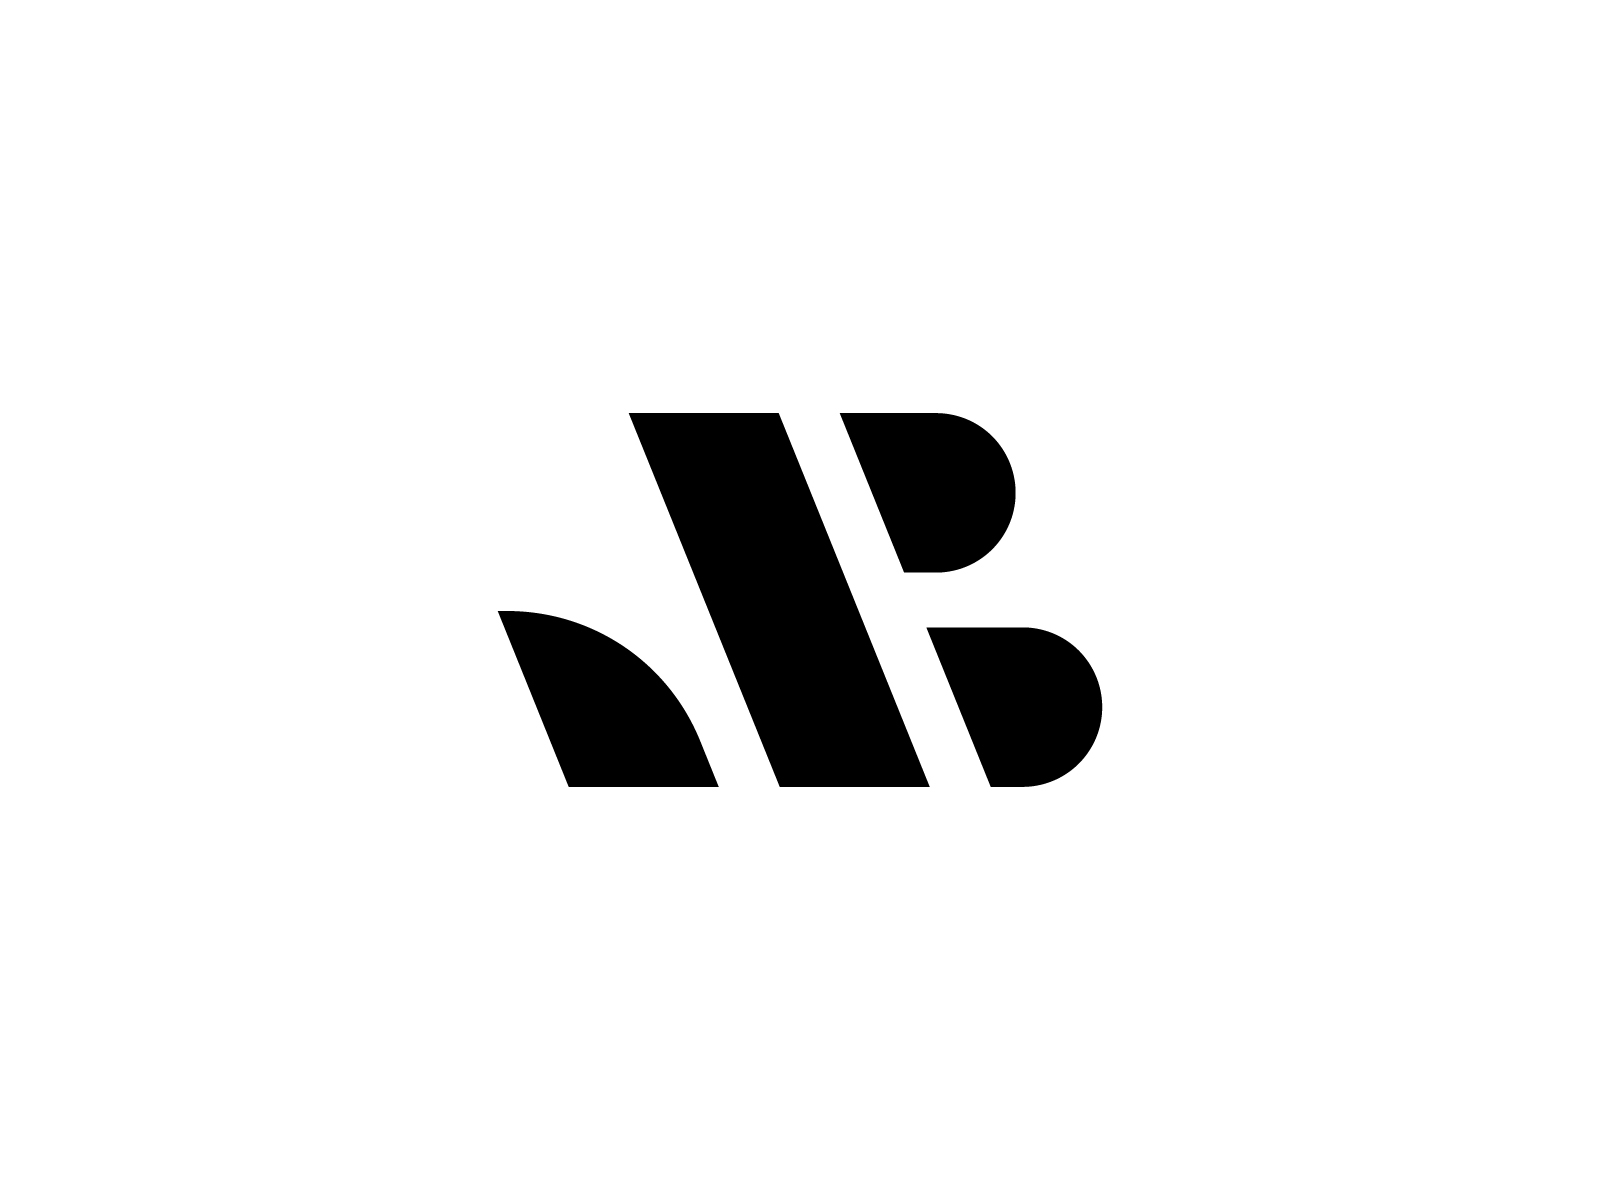 Initial letter bj logo template design Royalty Free Vector